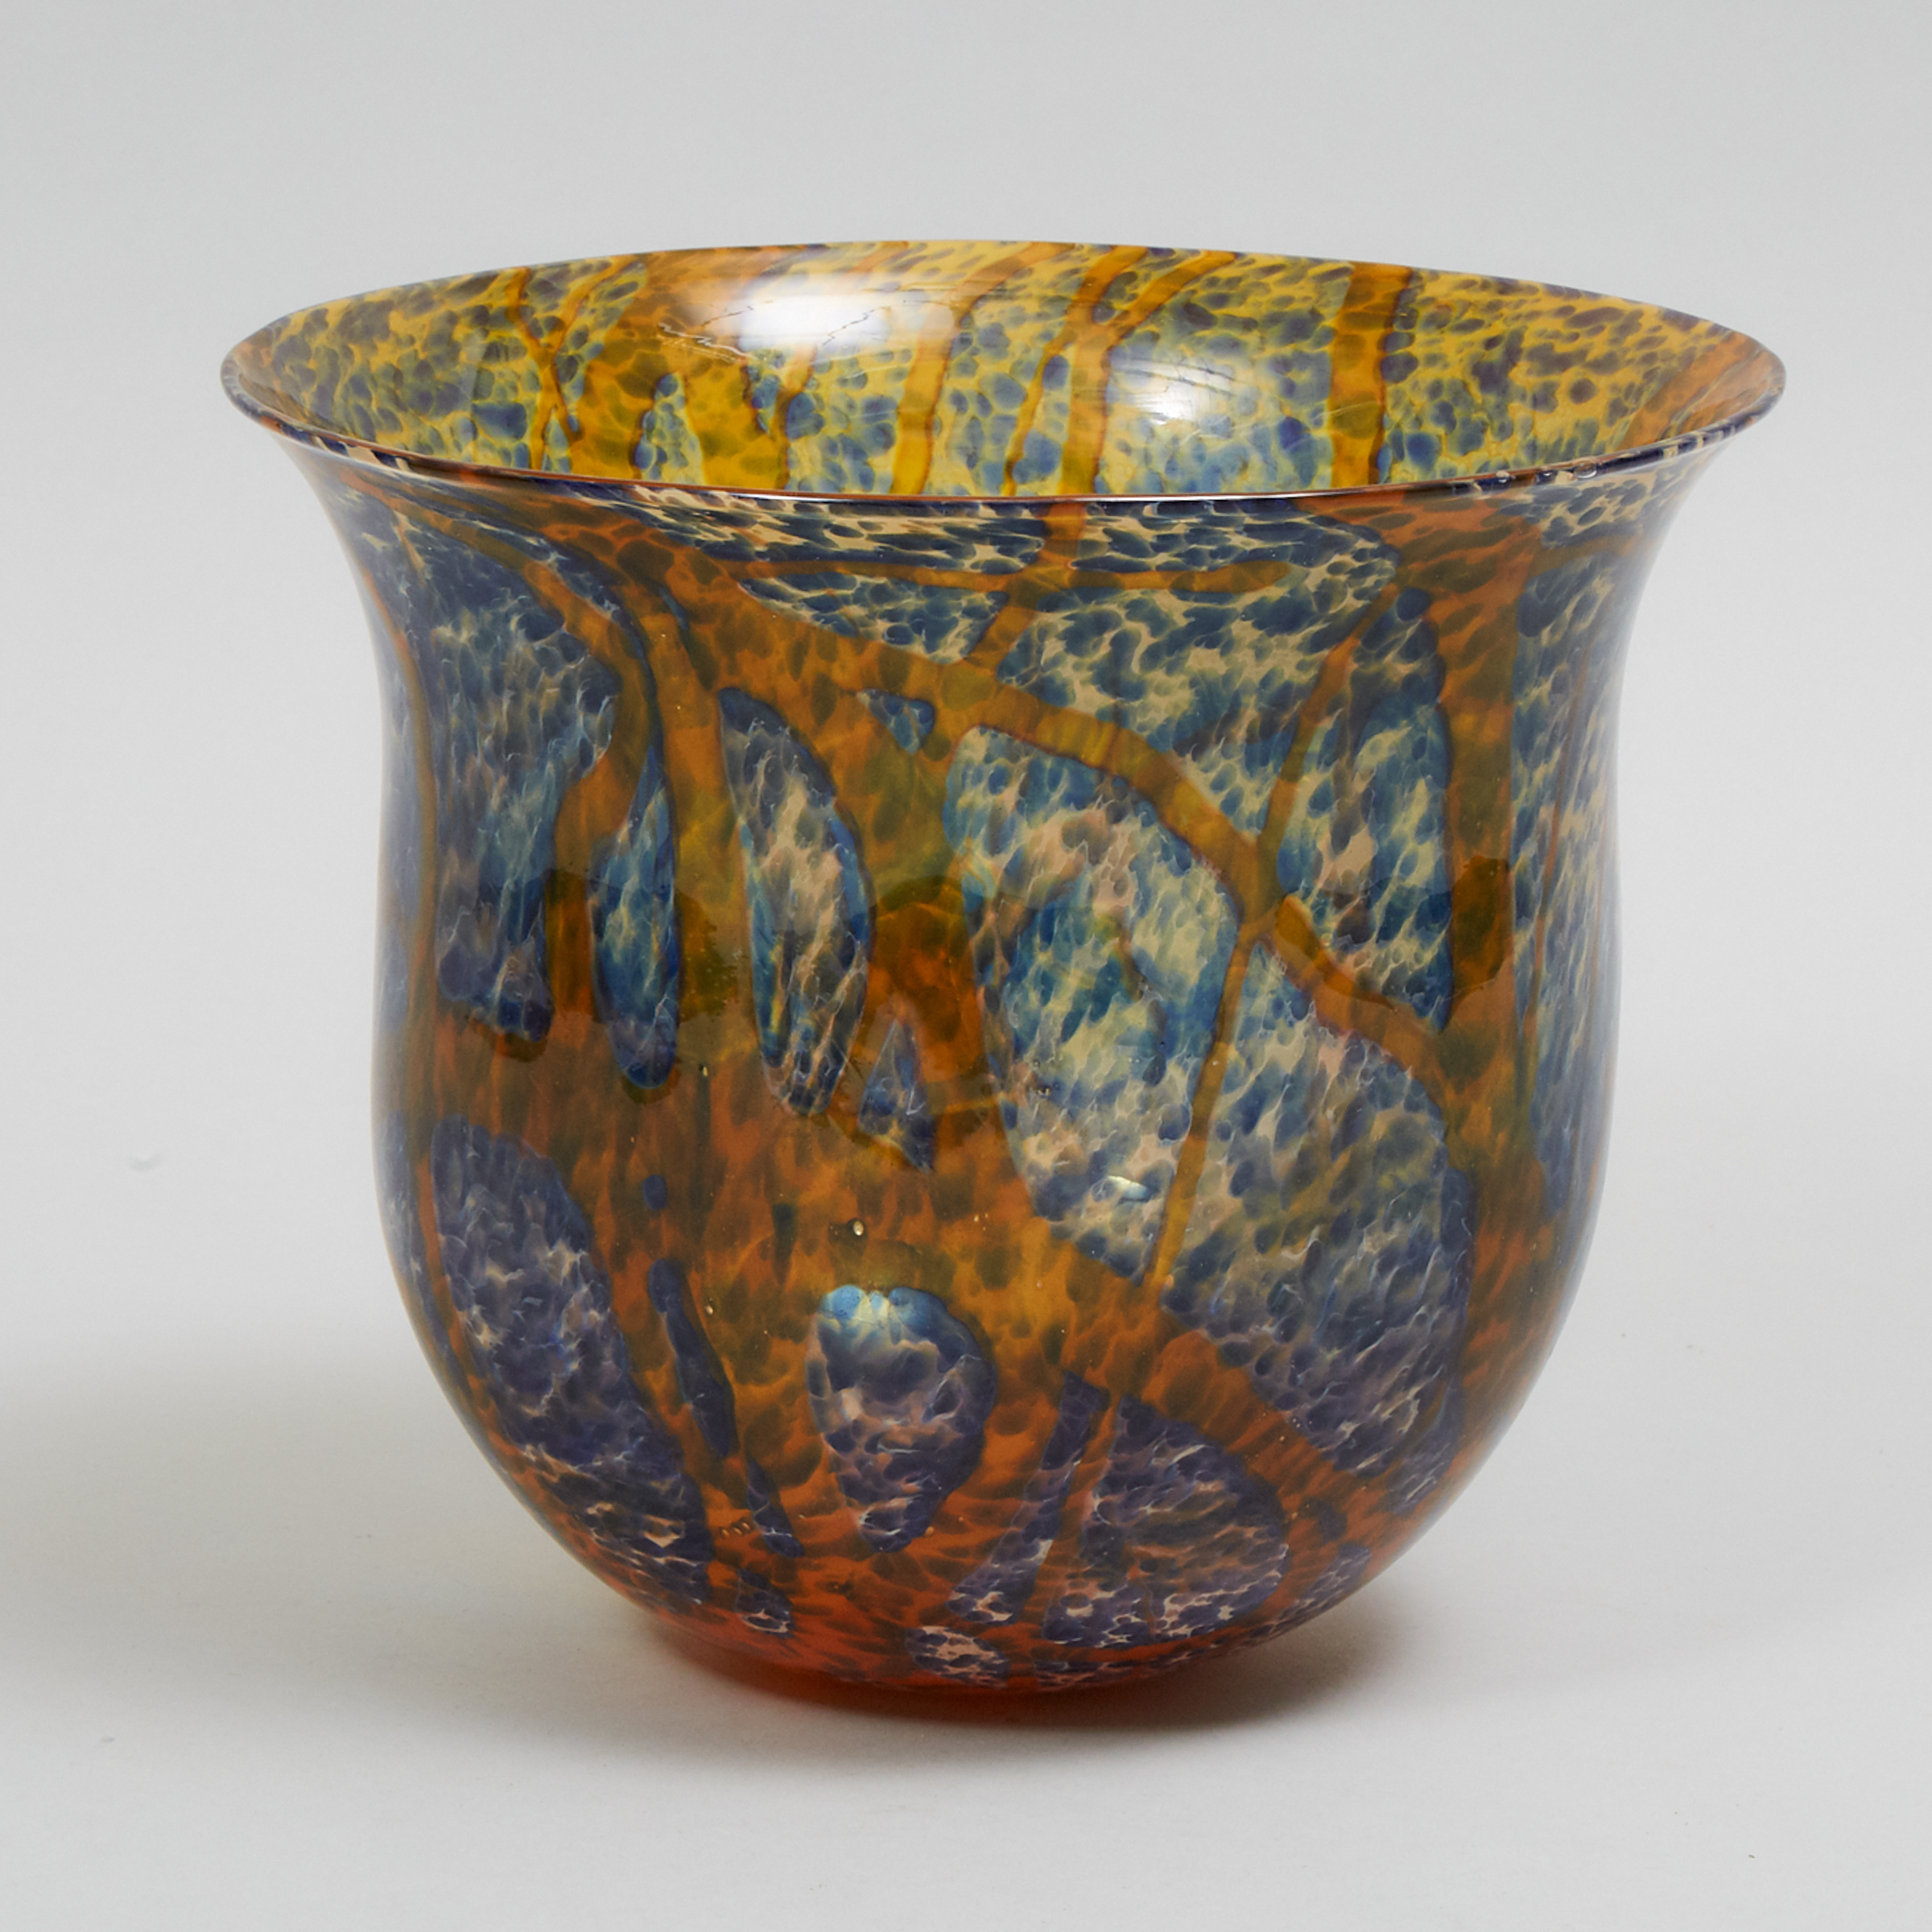 Daniel Crichton (Canadian, 1950-2002), 'Forest Bowl Sun' Glass Vase, 1978